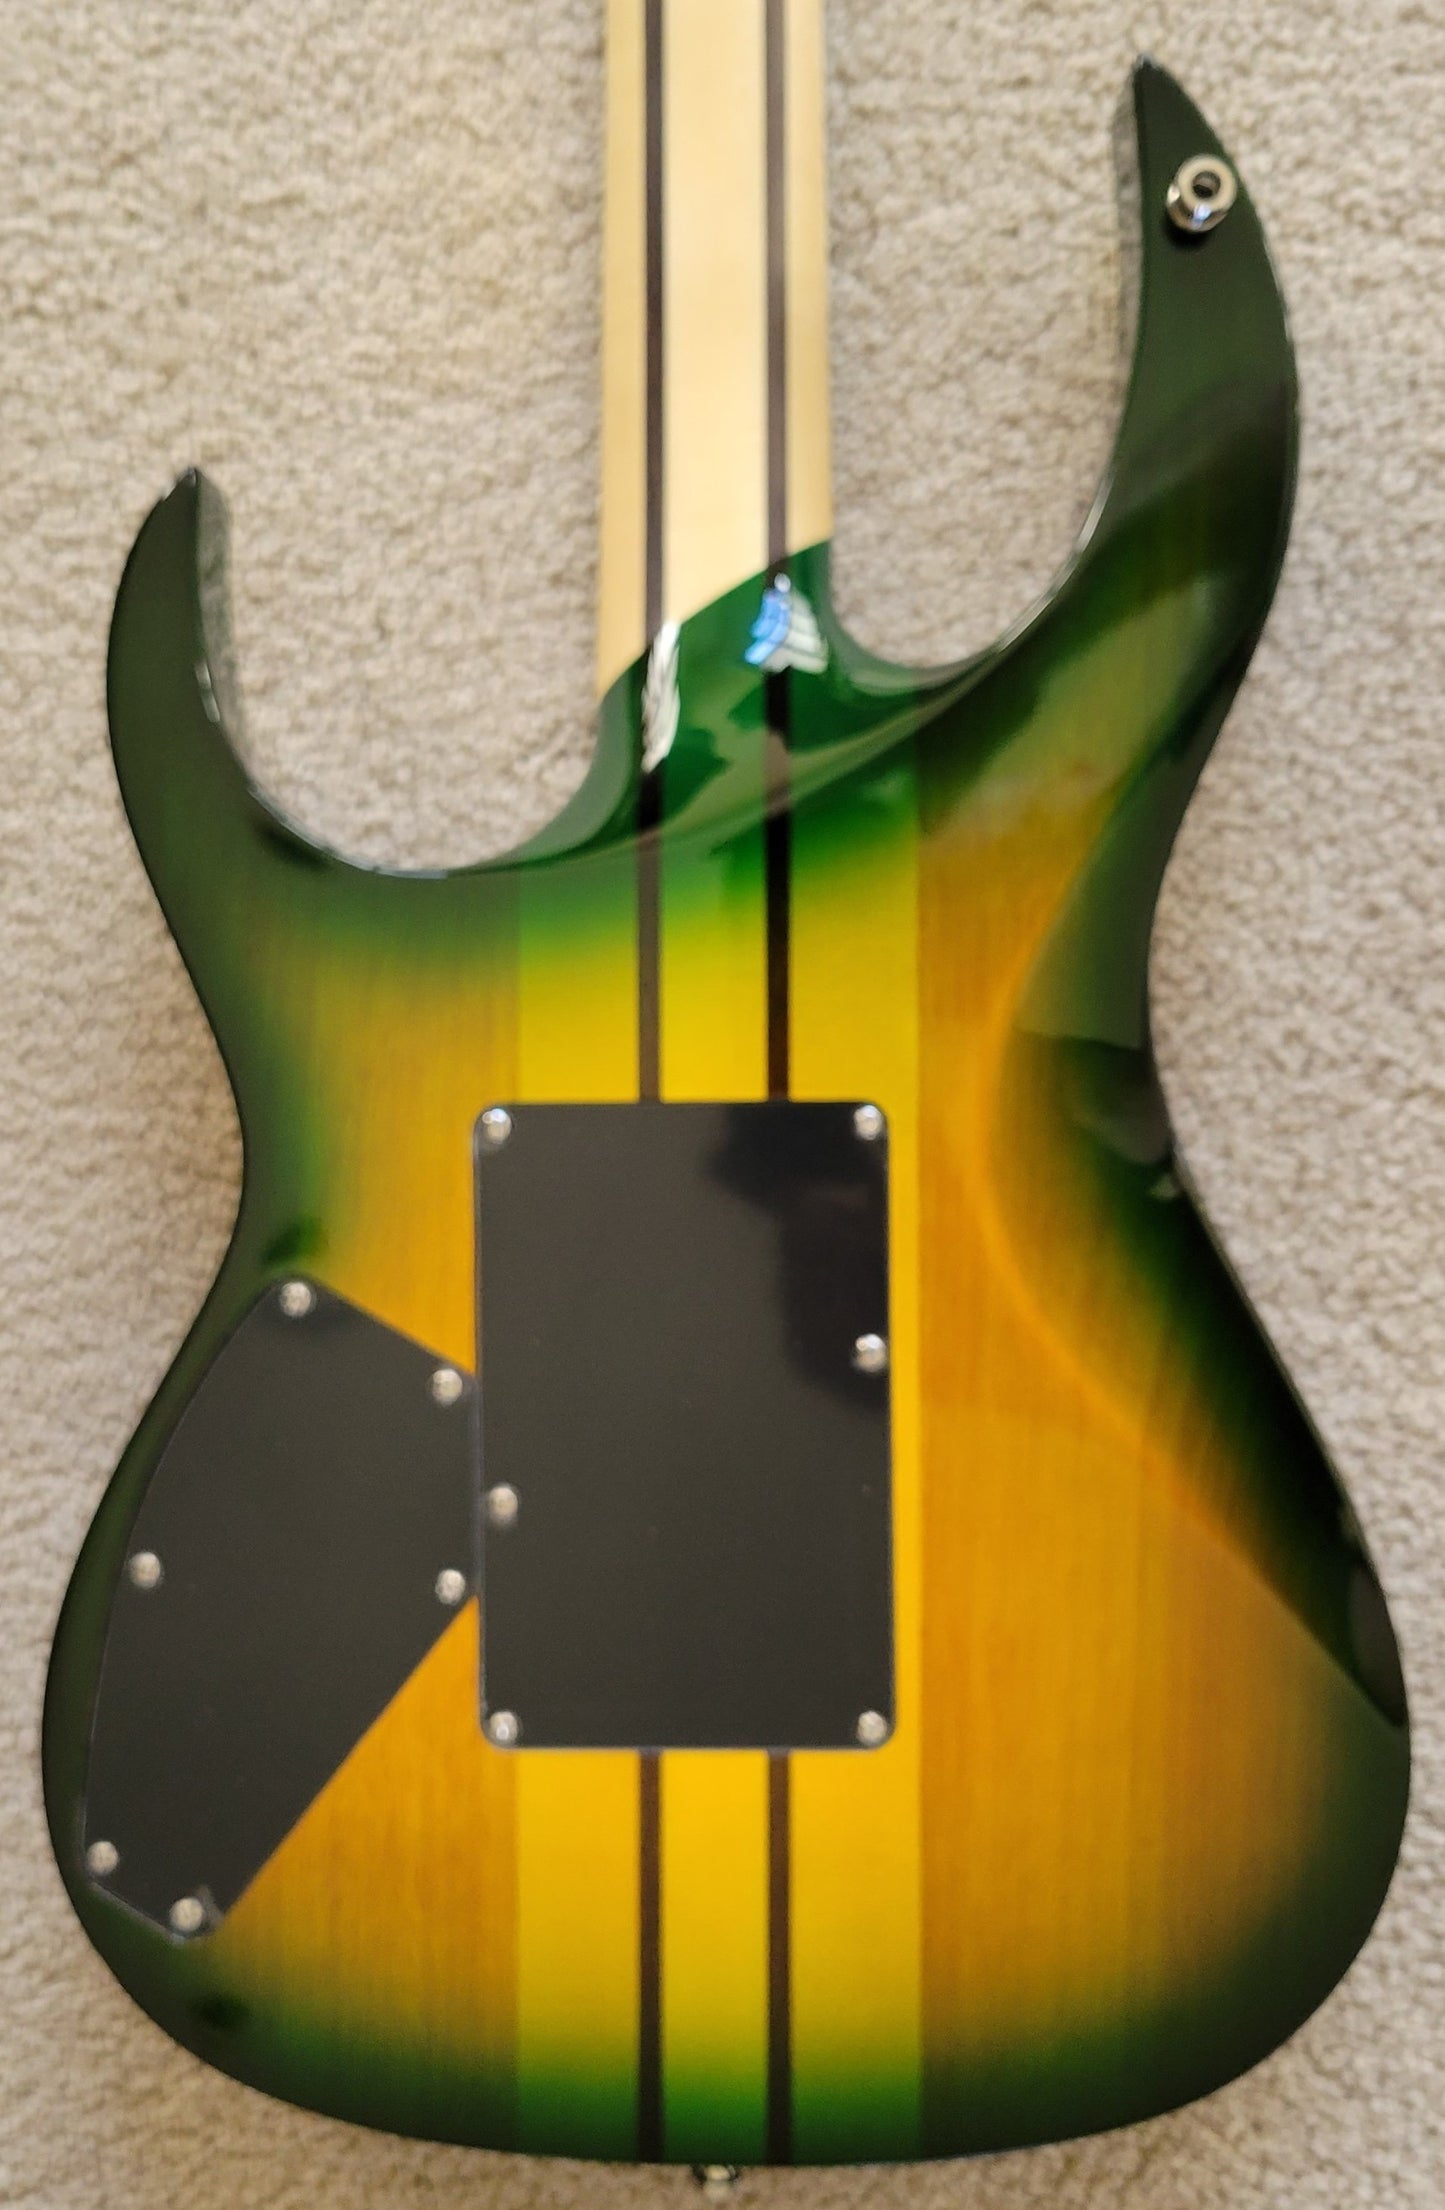 B.C. Rich Shredzilla Z6 Prophecy Exotic Floyd Rose Electric Guitar, Reptile Eye, New Hard Shell Case